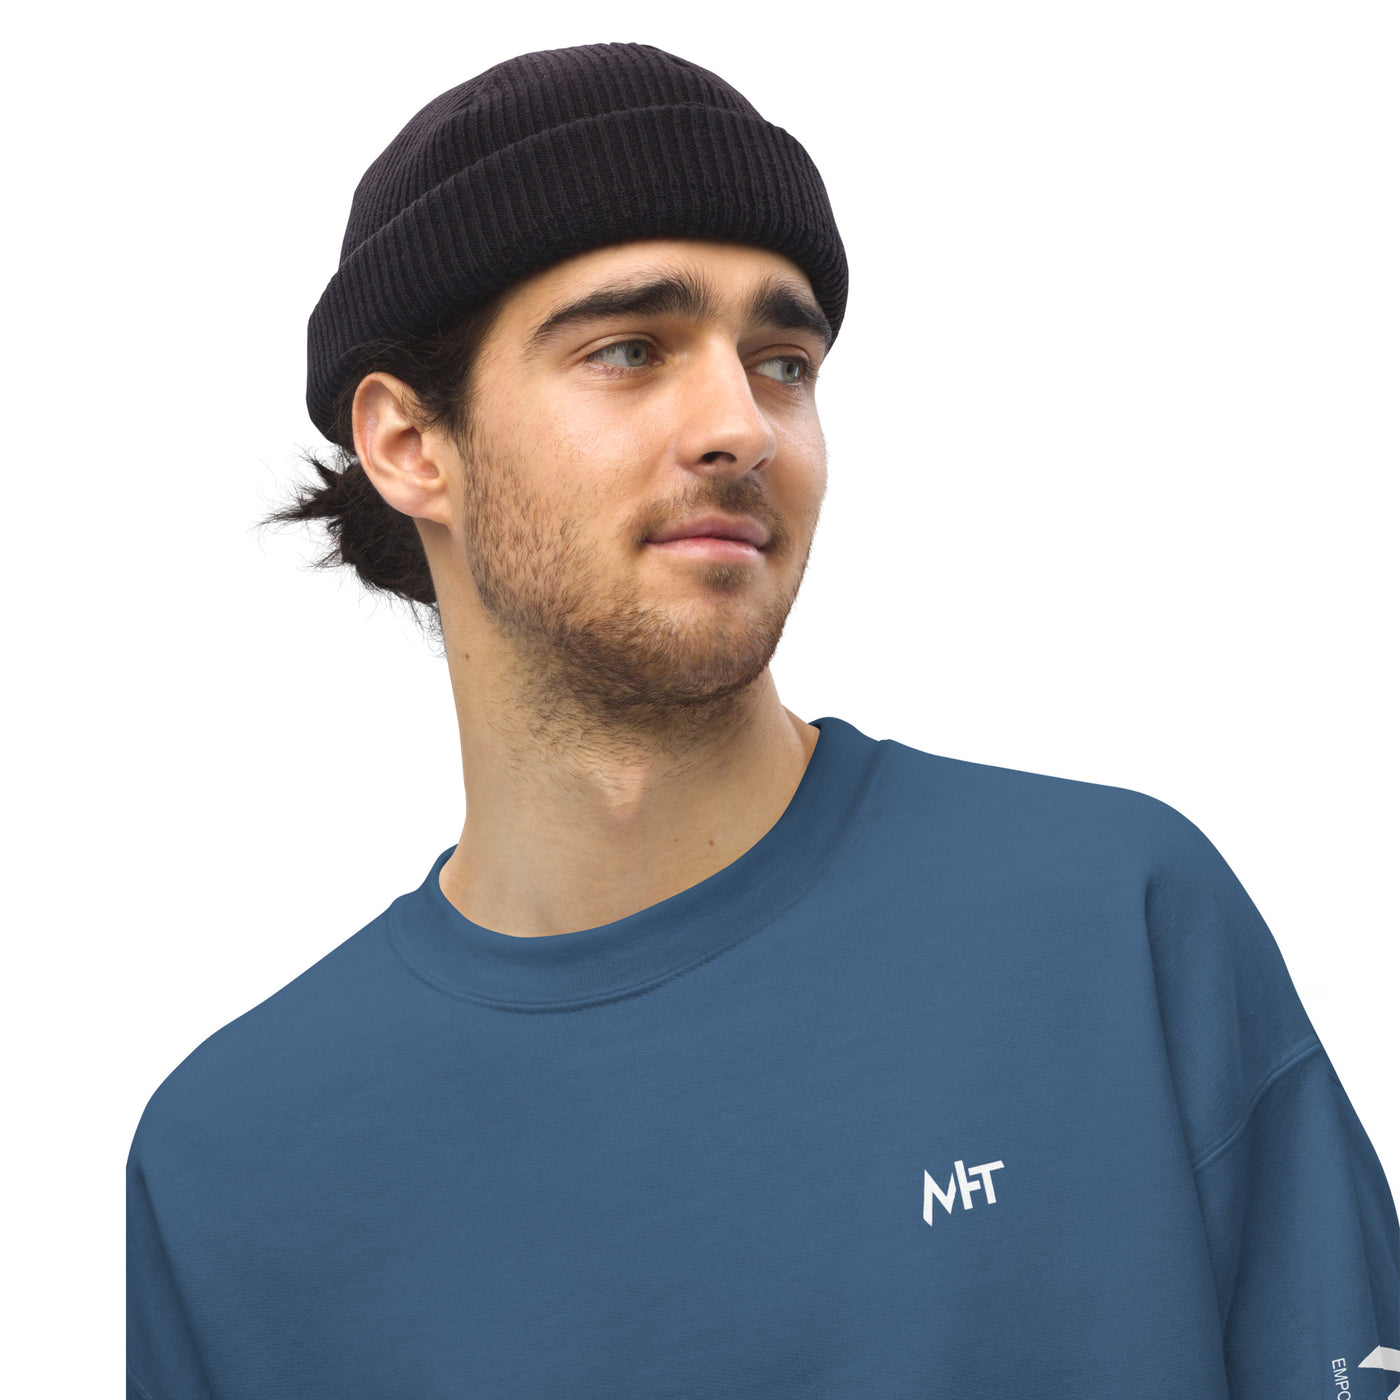 I just buy the deep - Unisex Sweatshirt (back print)